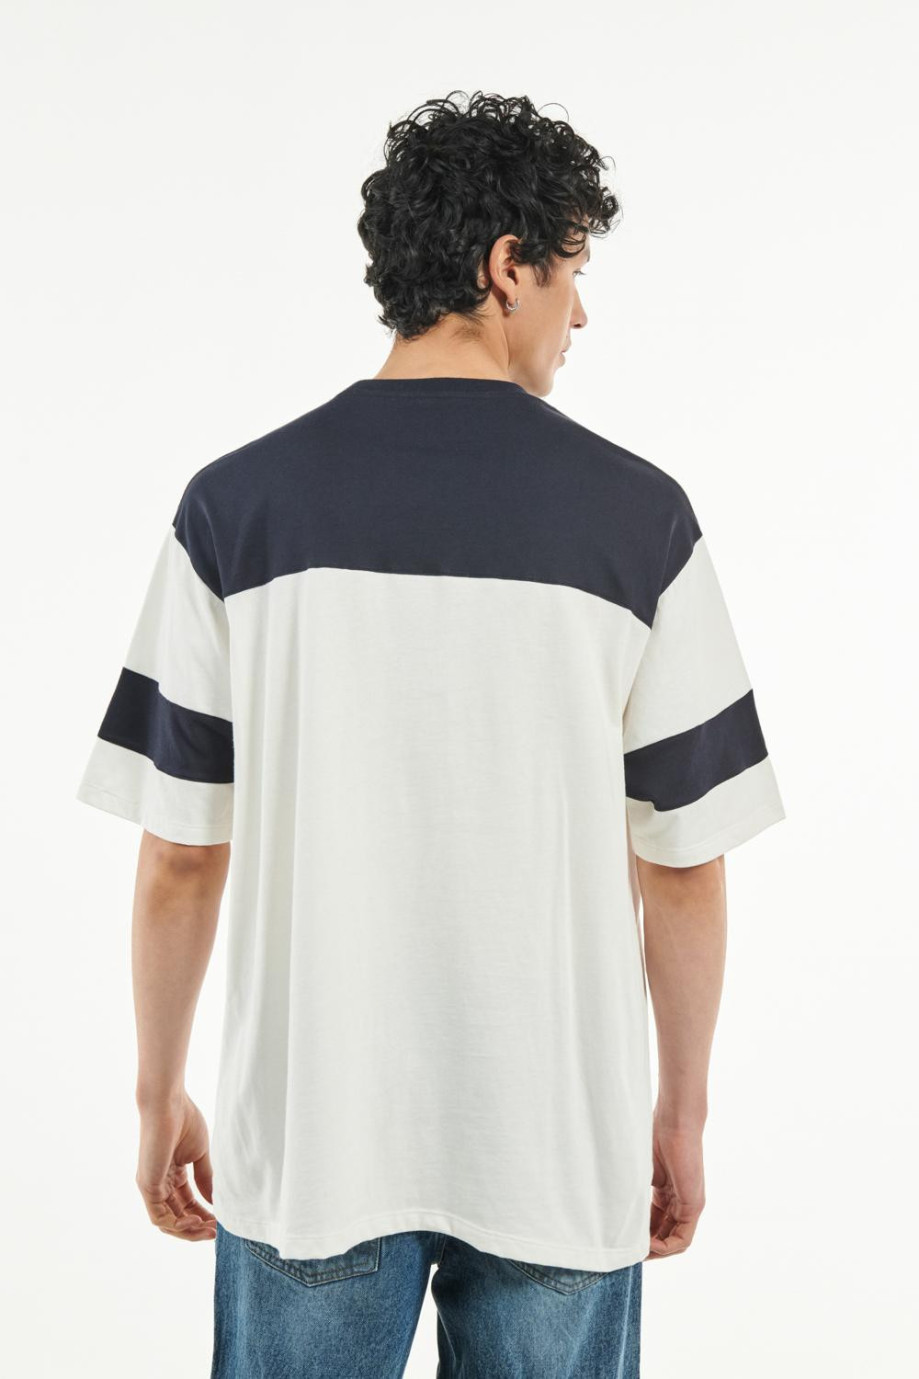 Camiseta manga corta crema clara oversize con diseño college de NY en frente